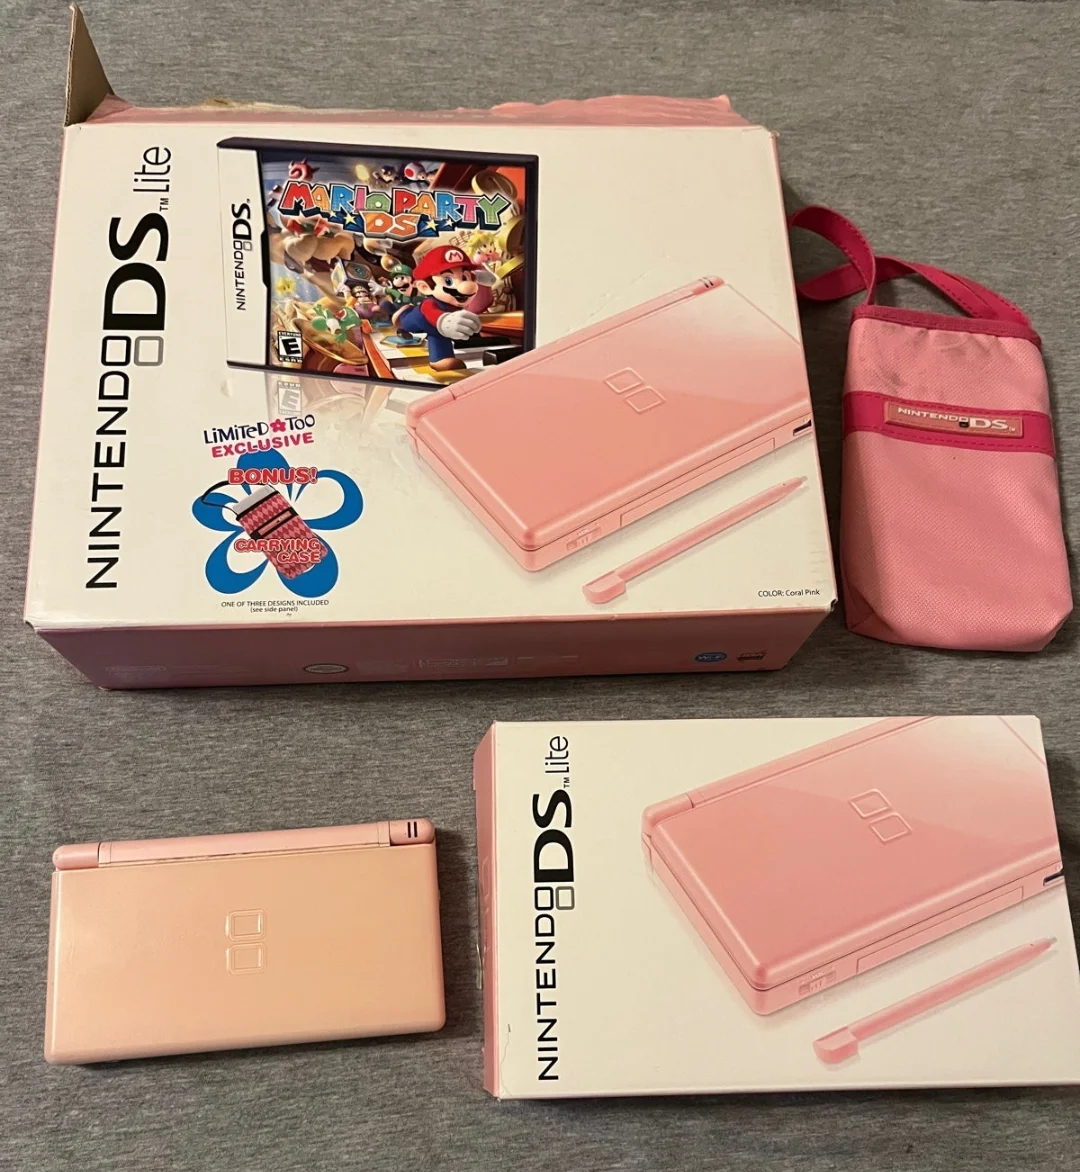  Nintendo DS Lite Limited Too Exclusive Bundle